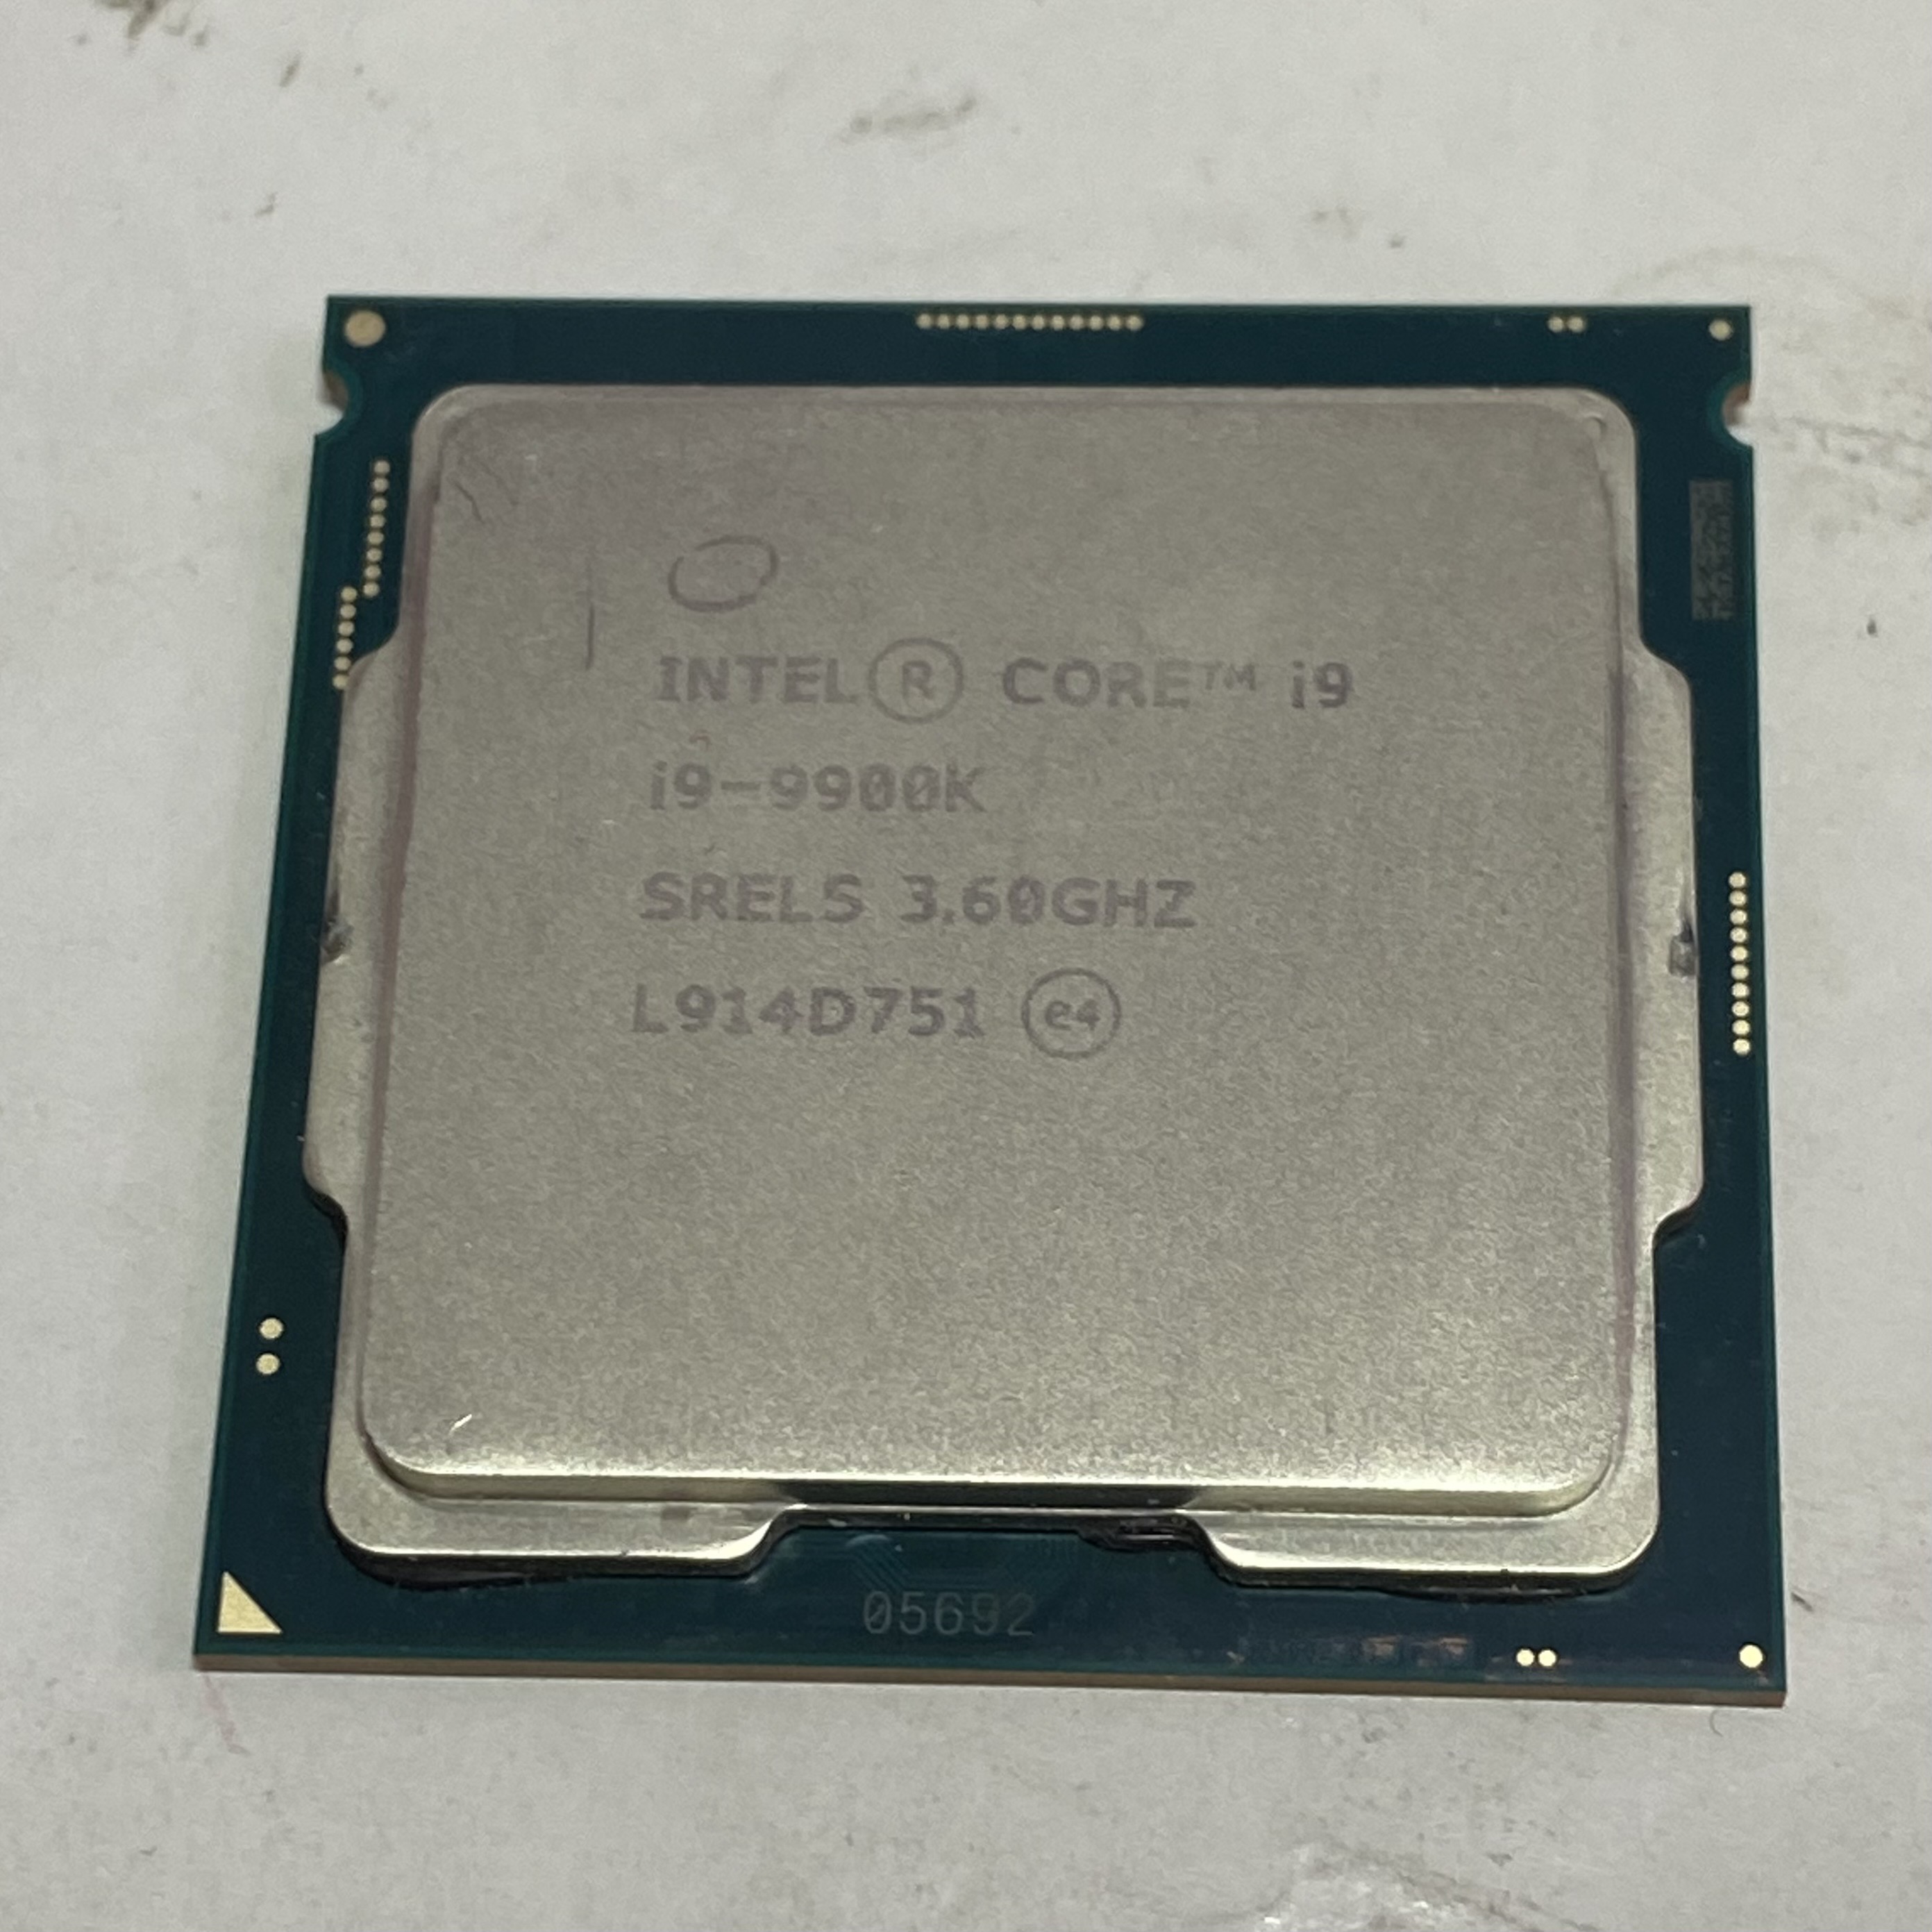 Intel Core i9-9900K 3.60GHZ